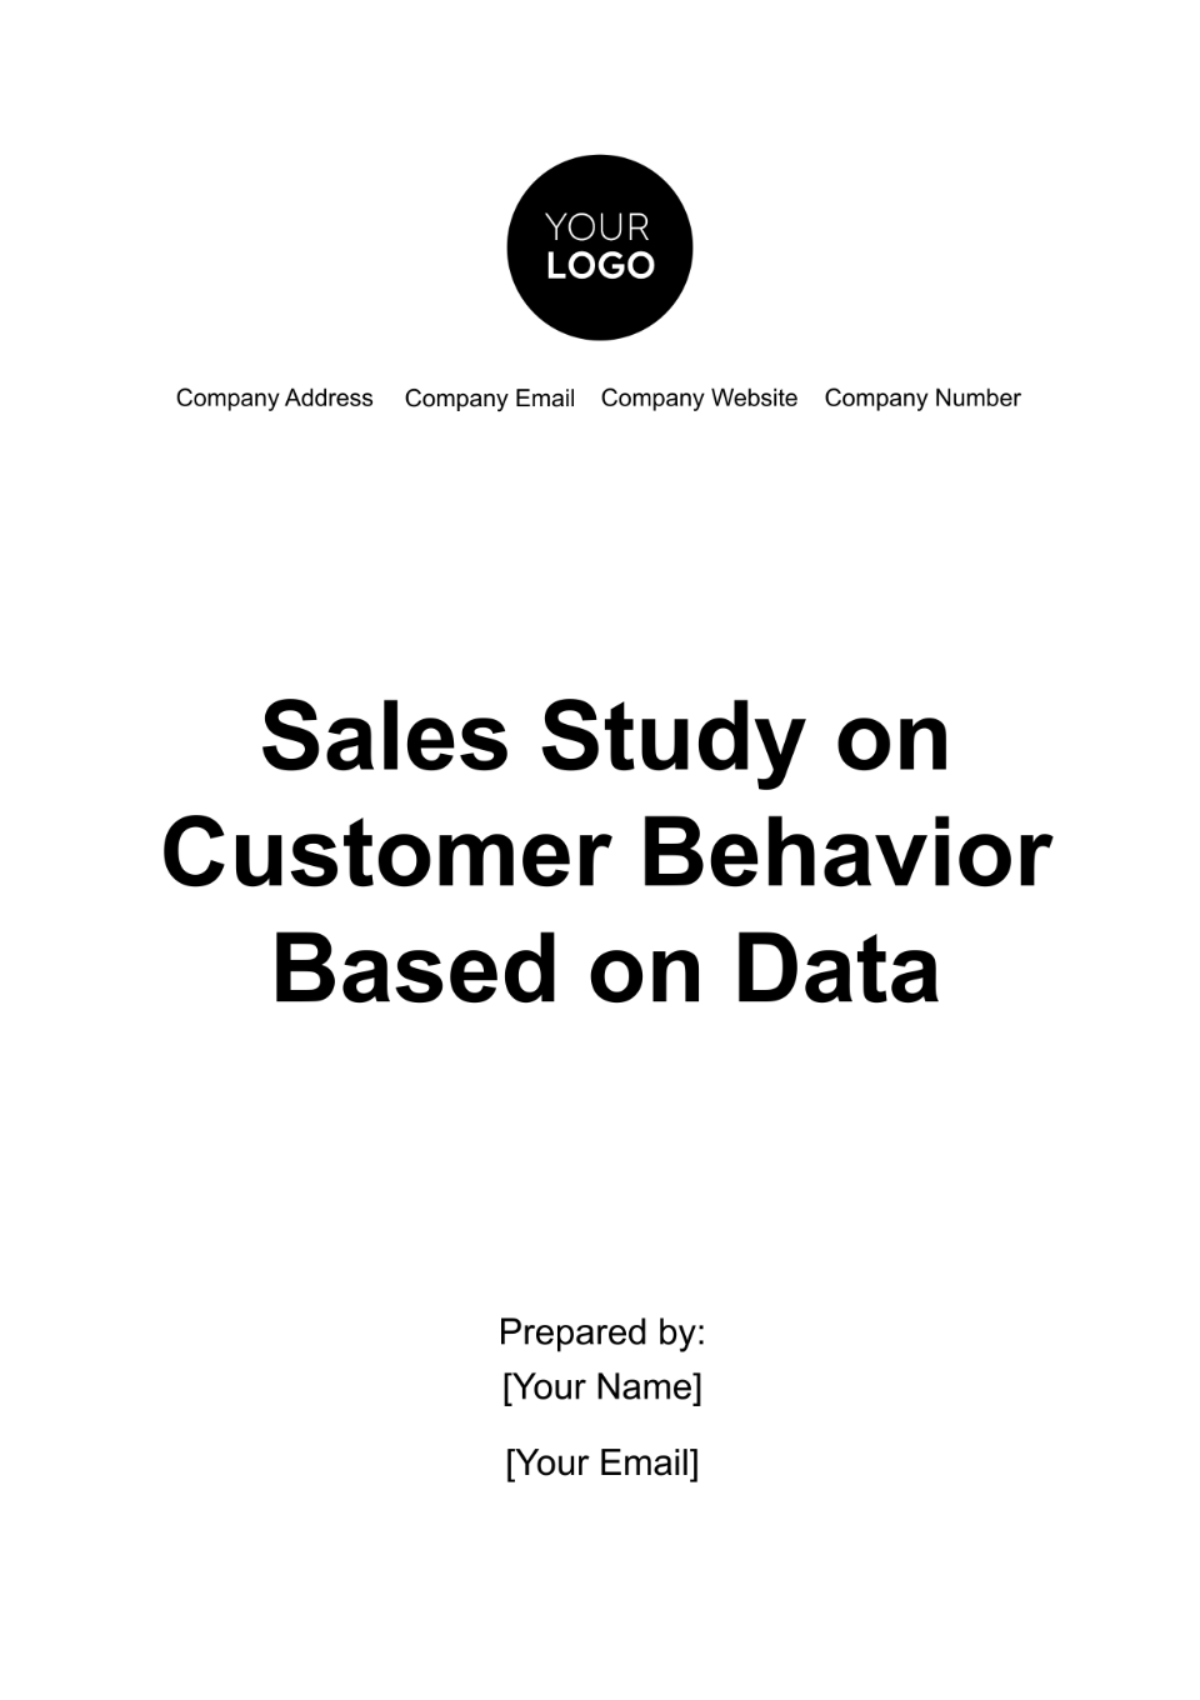 Free Sales Study on Customer Behavior Based on Data Template